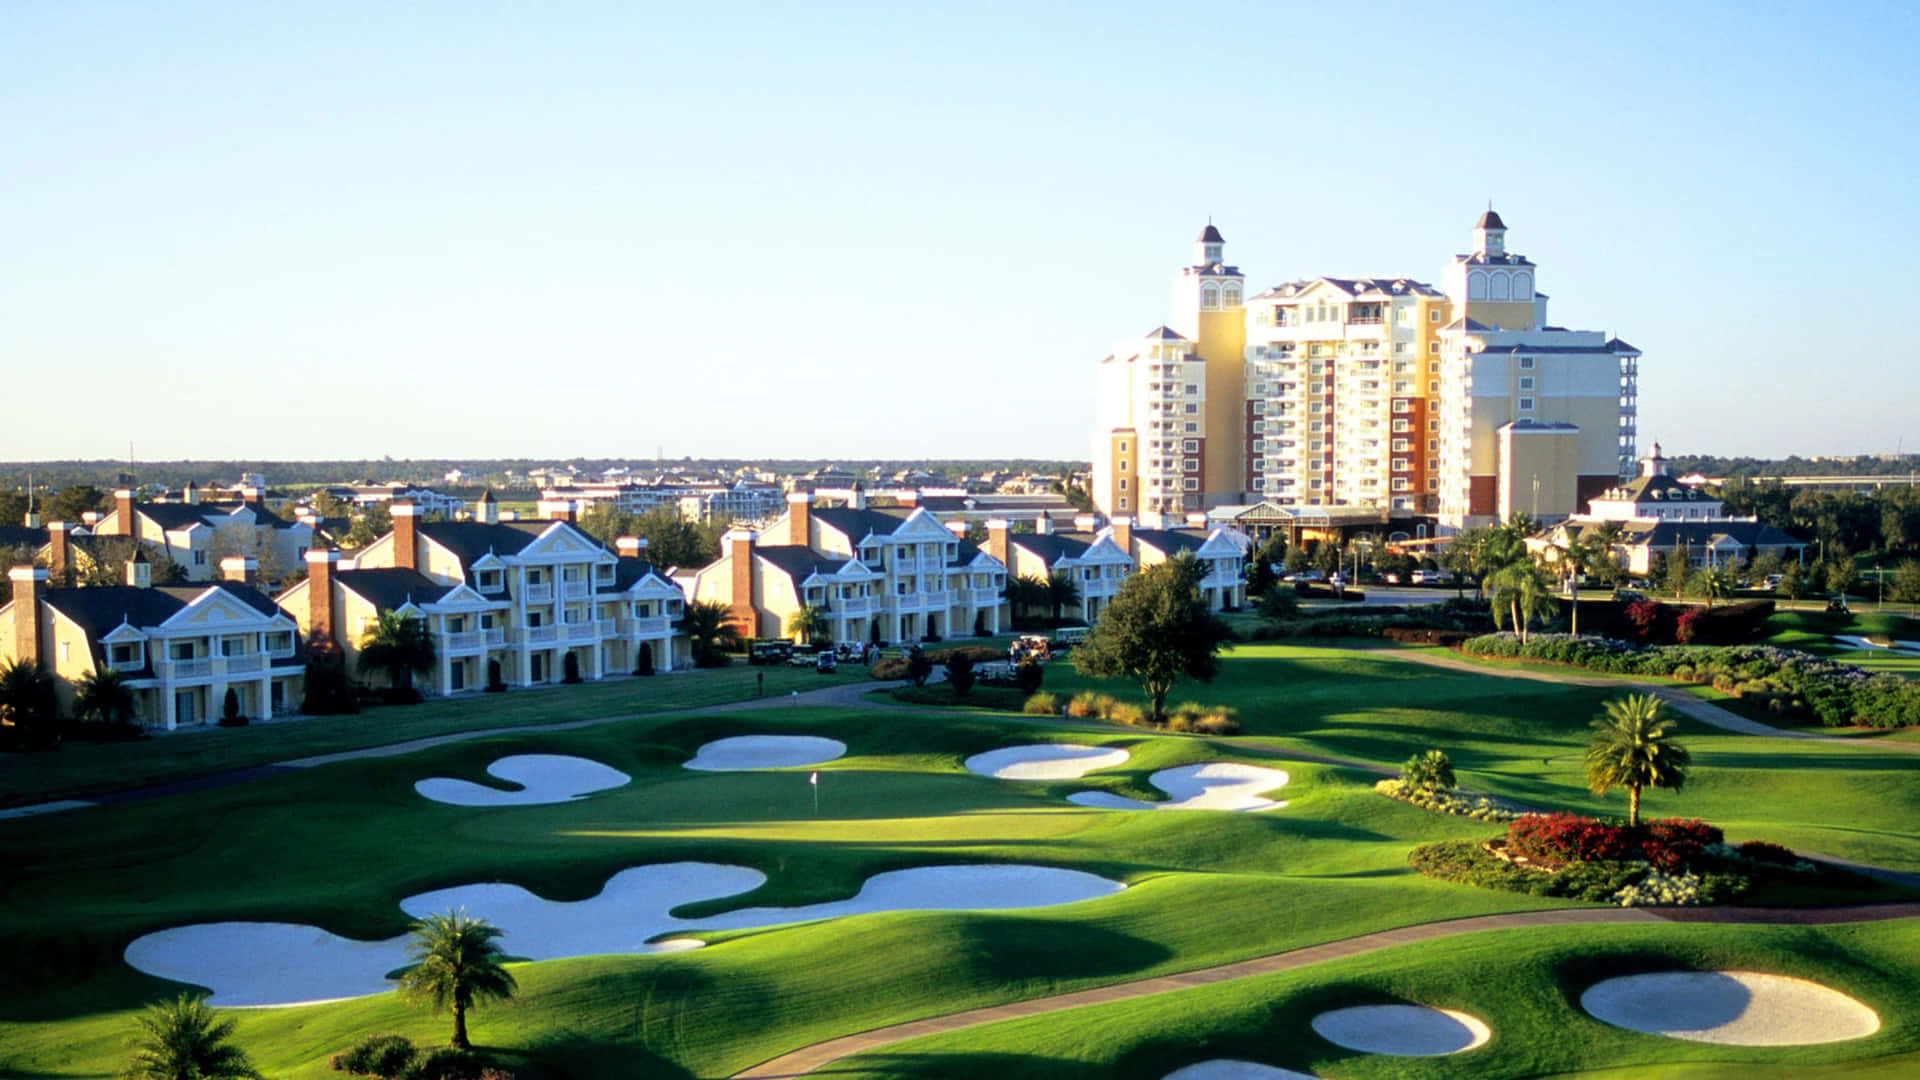 Reunionresort Golf Courses È Un Campo Da Golf In Florida. Sfondo